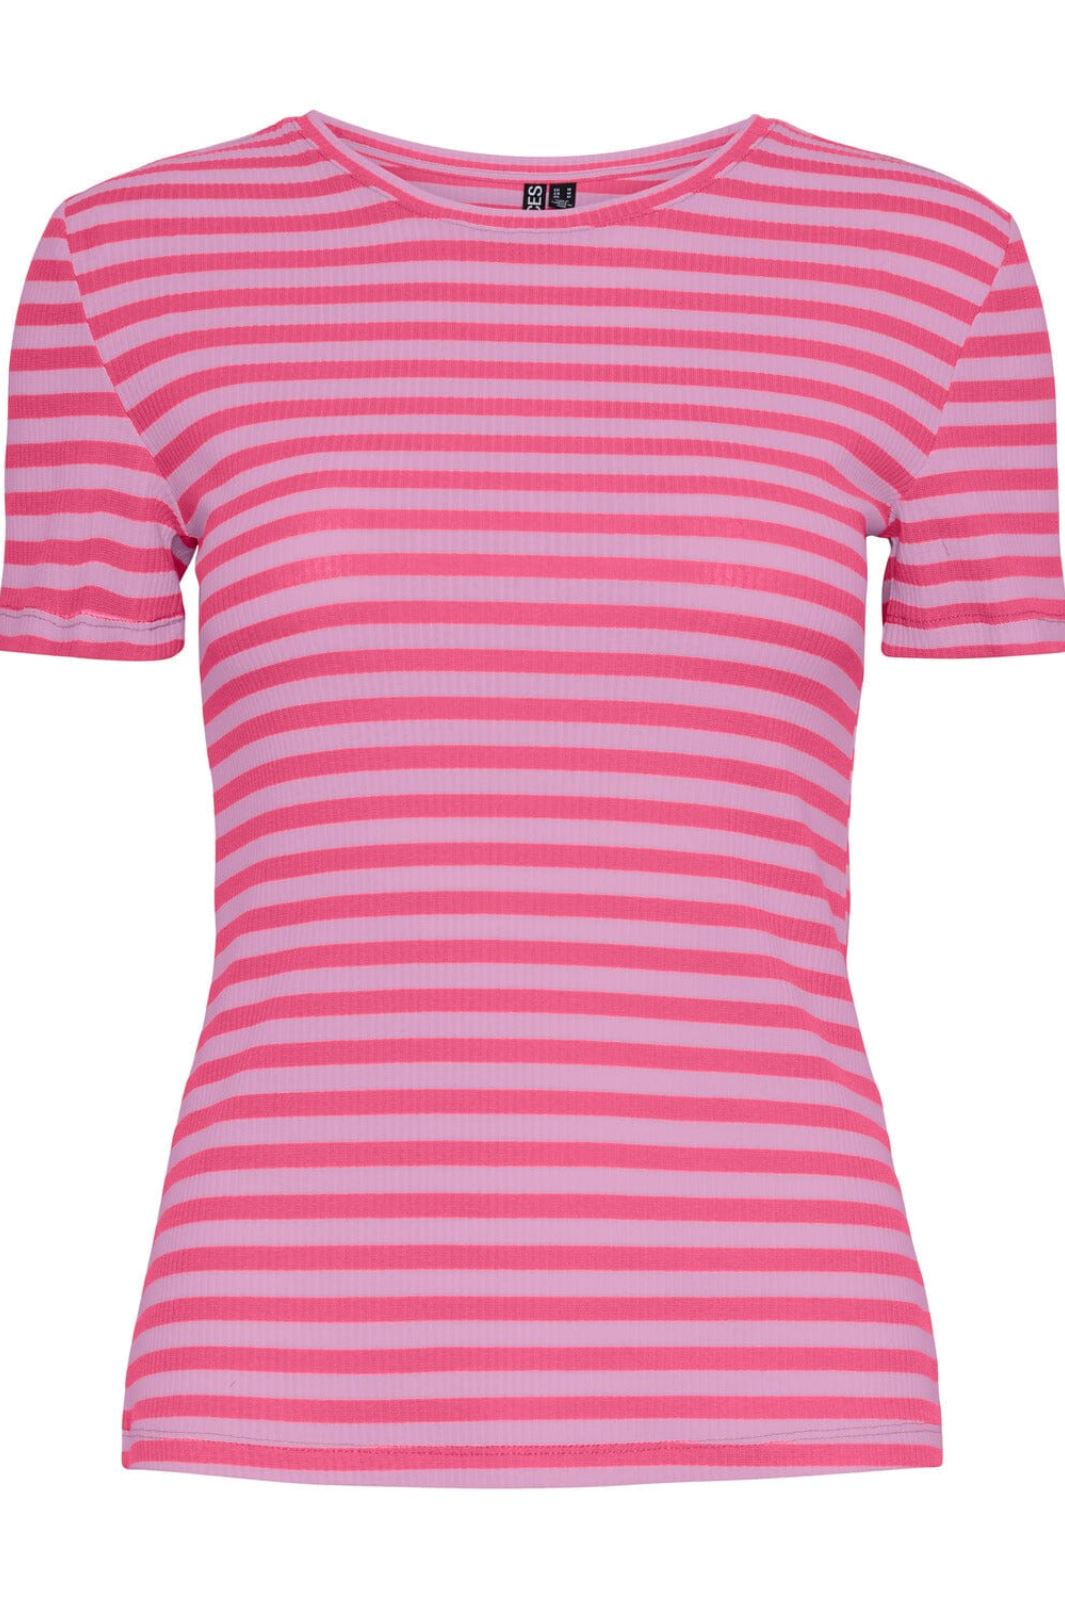 Pieces - Pcruka Ss Top - 4474893 Hot Pink pastel lavender T-shirts 